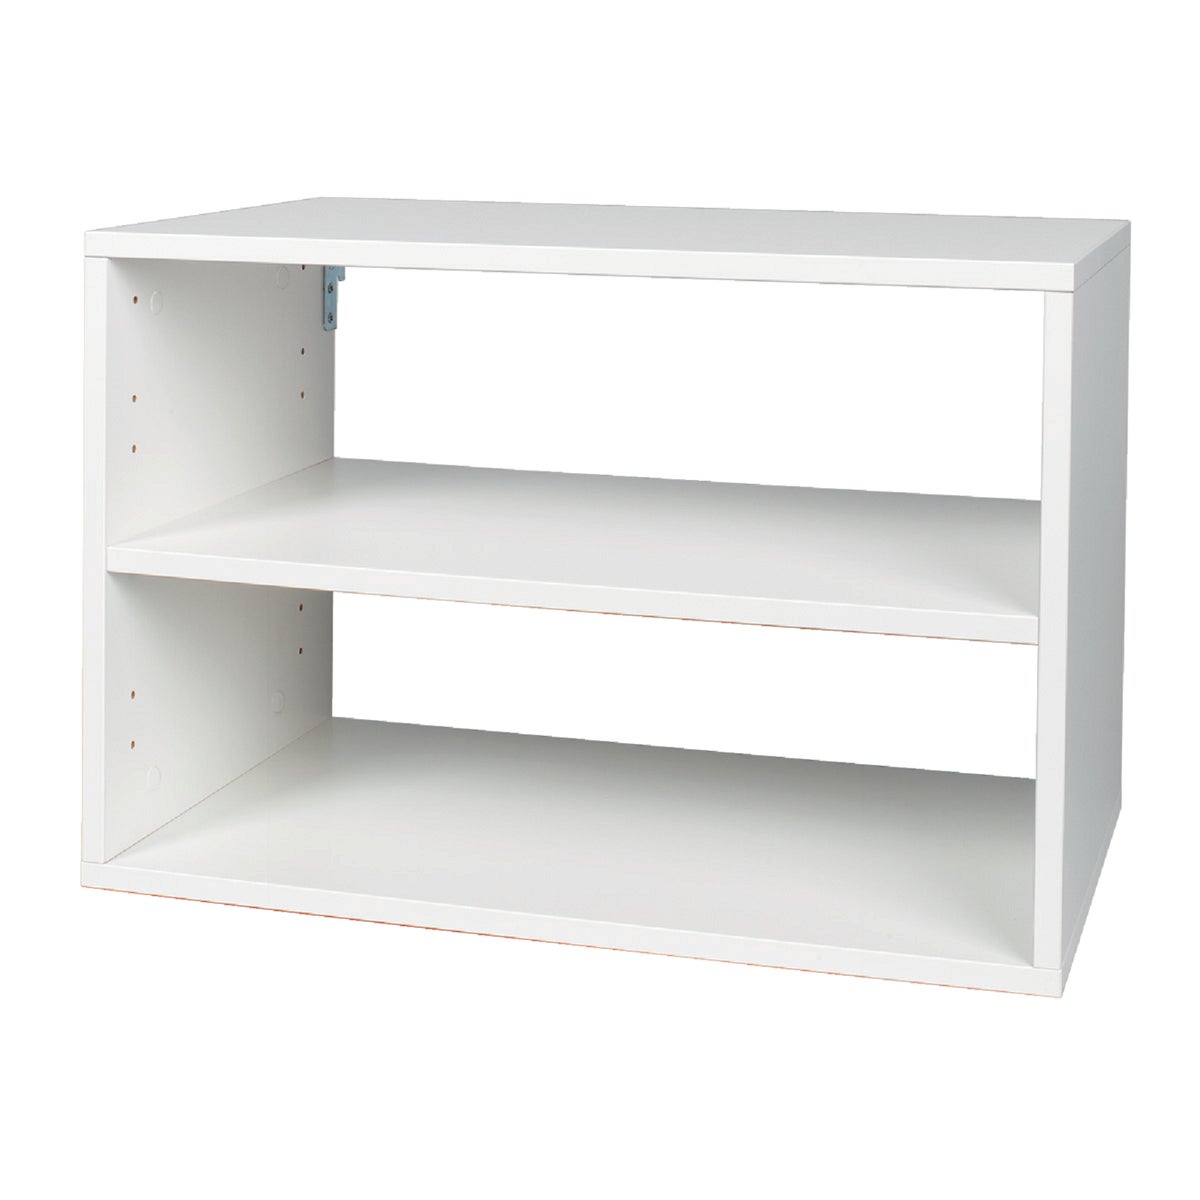 FreedomRail 1-Shelf White Organization Box